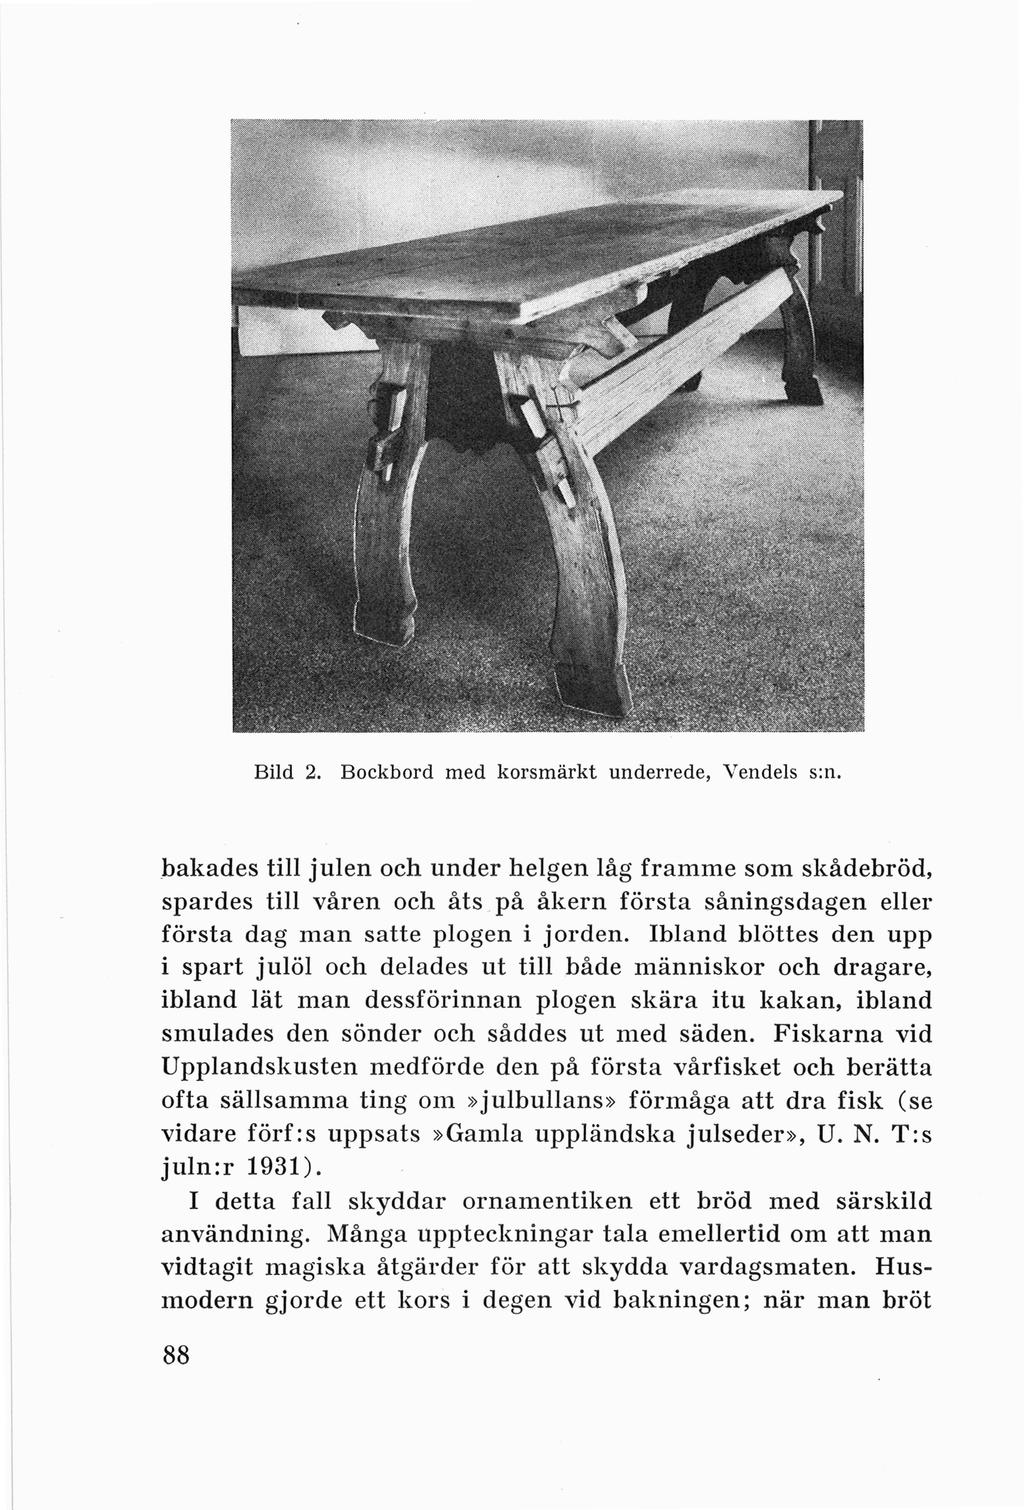 Bild 2. Bockbord med korsmärkt underrede, Vendels s:n.